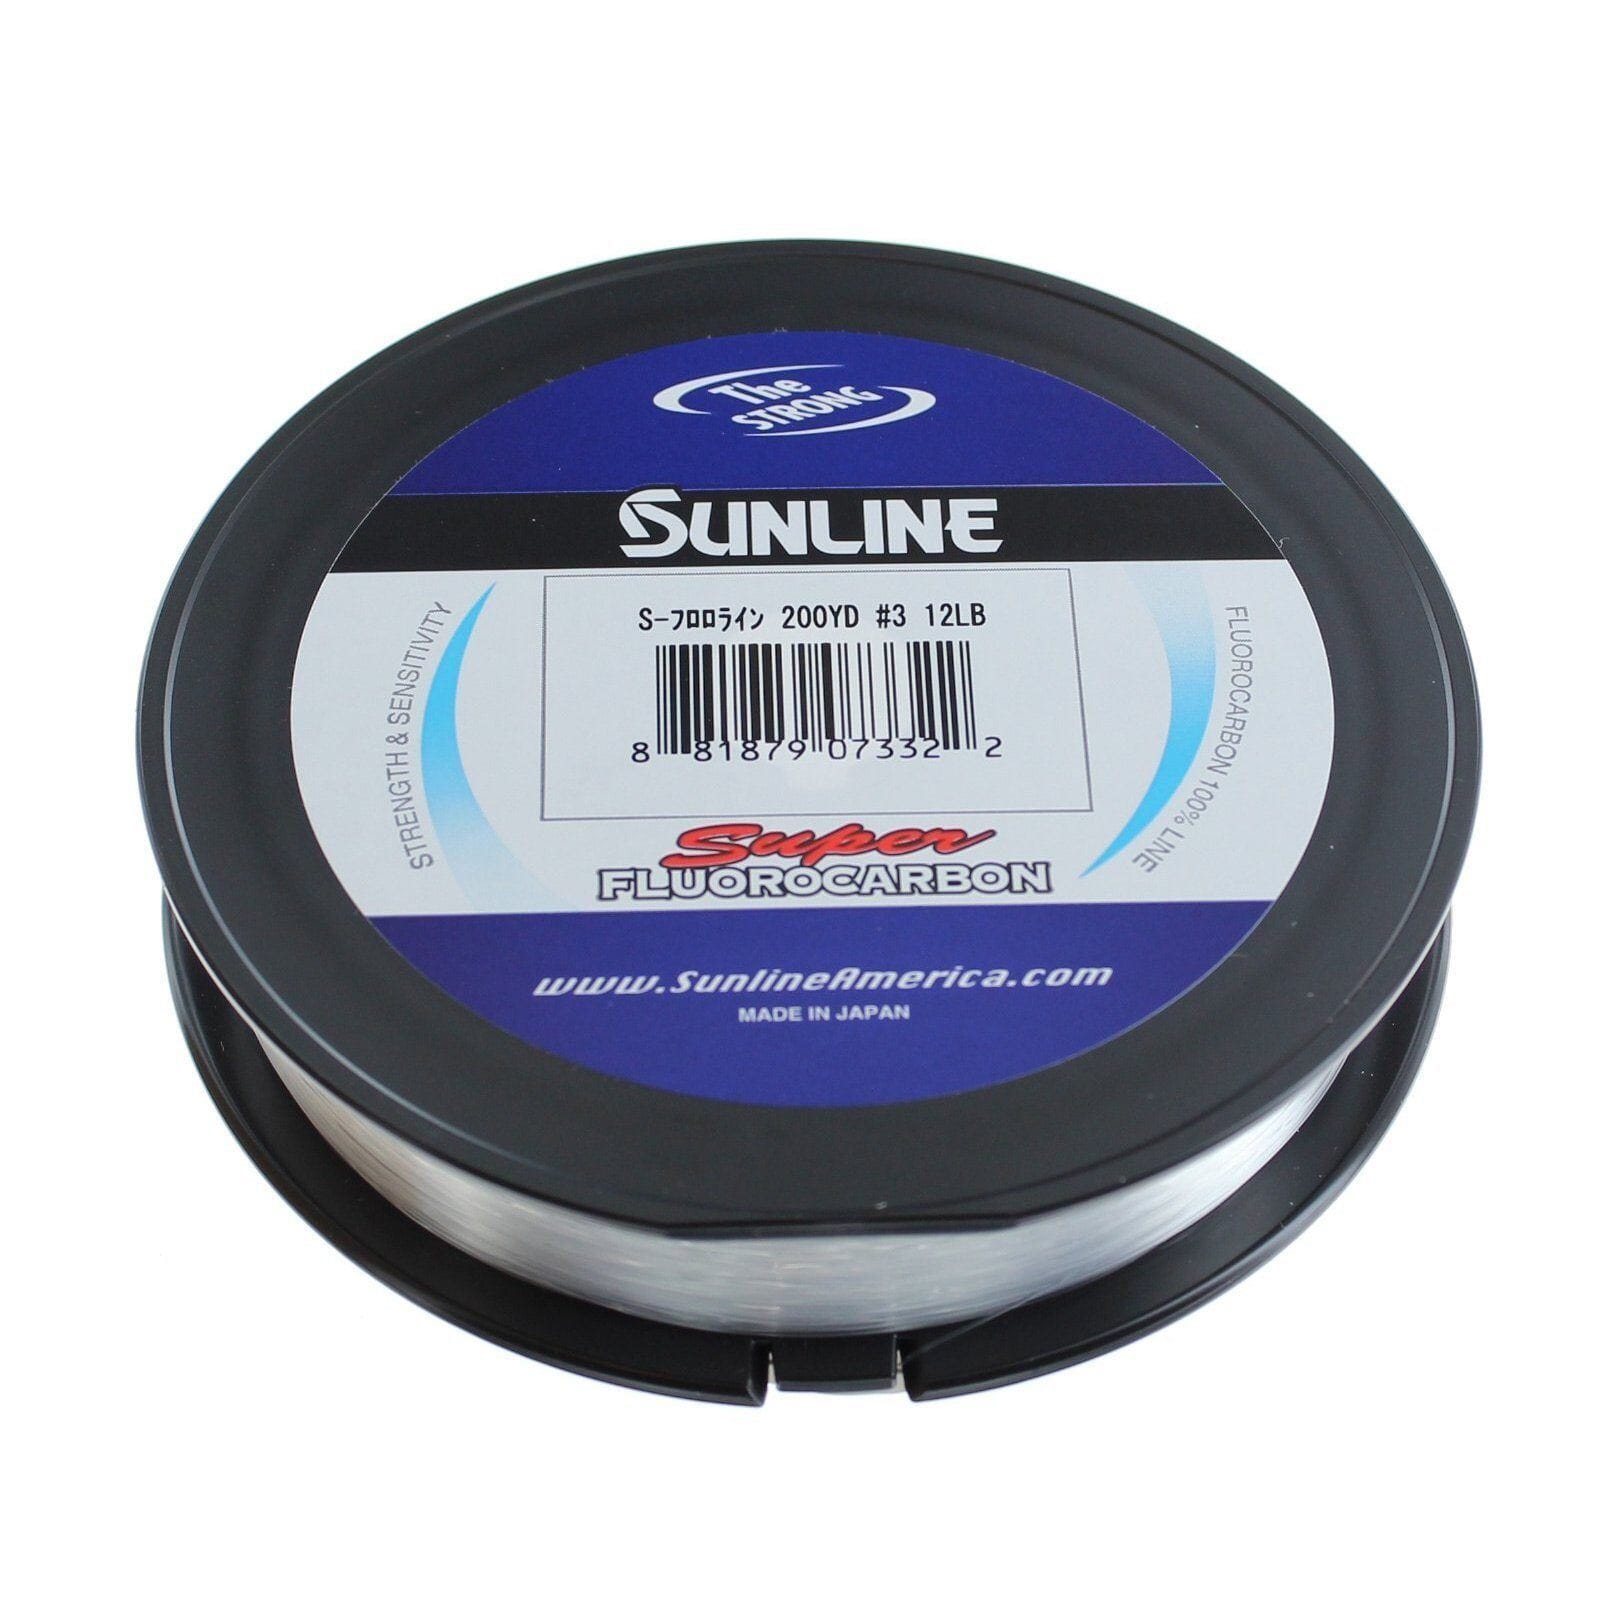 Sunline Assassin FC Fluorocarbon Fishing Line 8lb 225yd Clear